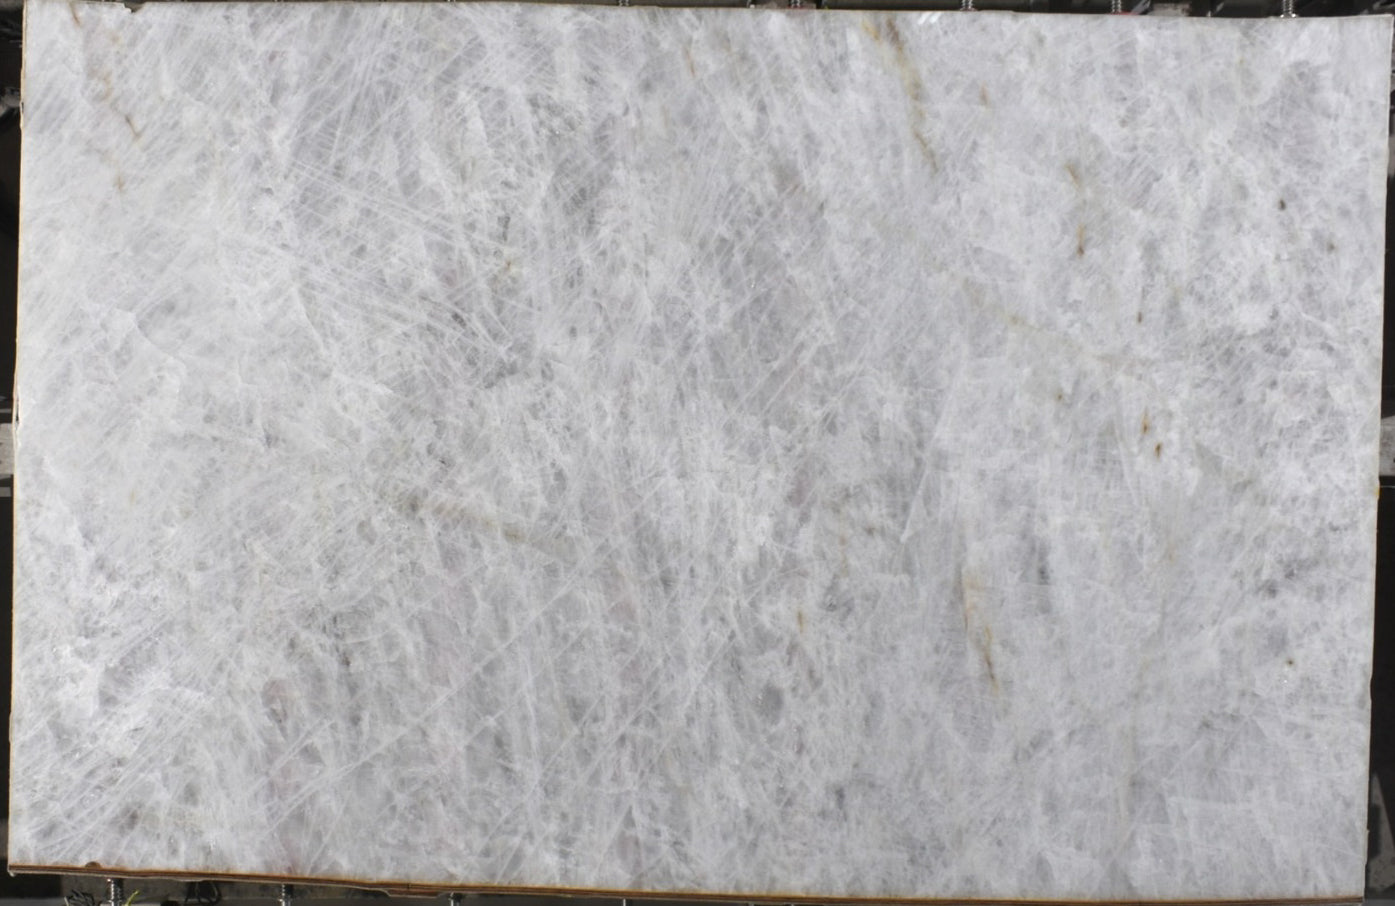  White Diamond A2 Standard Quartzite Slab 3/4 - 14100#49 -  73x116 